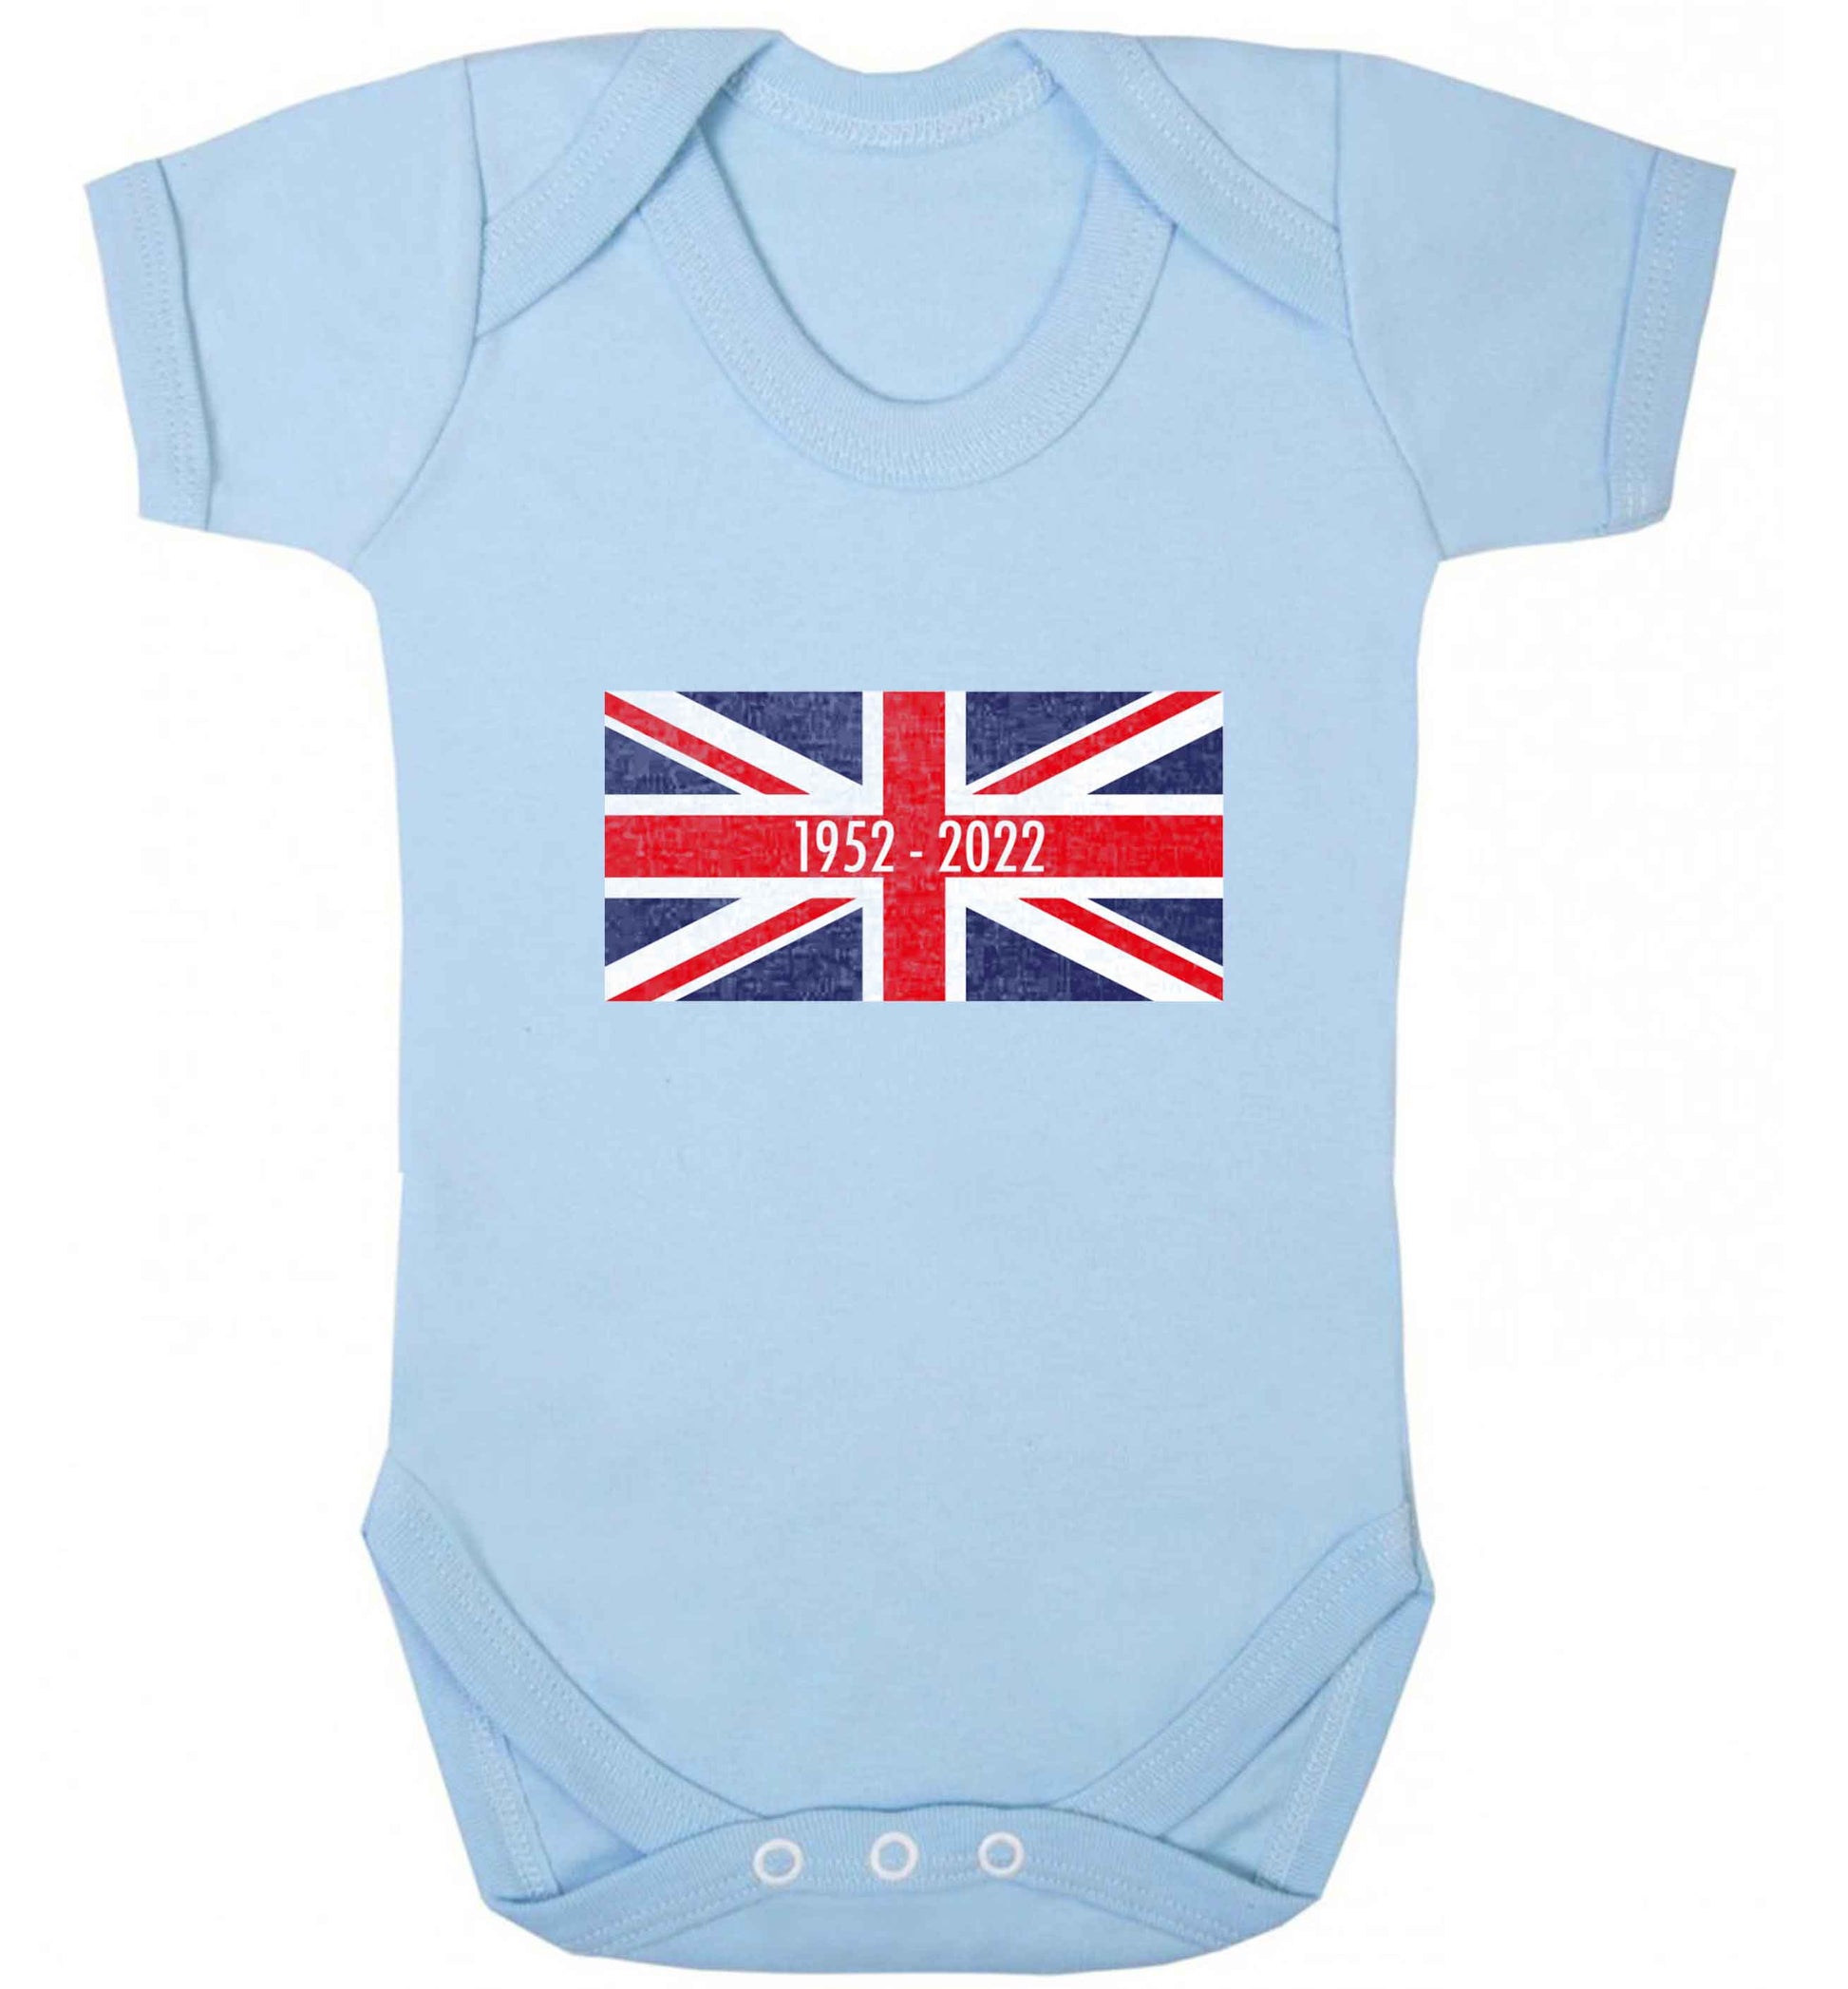 British flag Queens jubilee baby vest pale blue 18-24 months